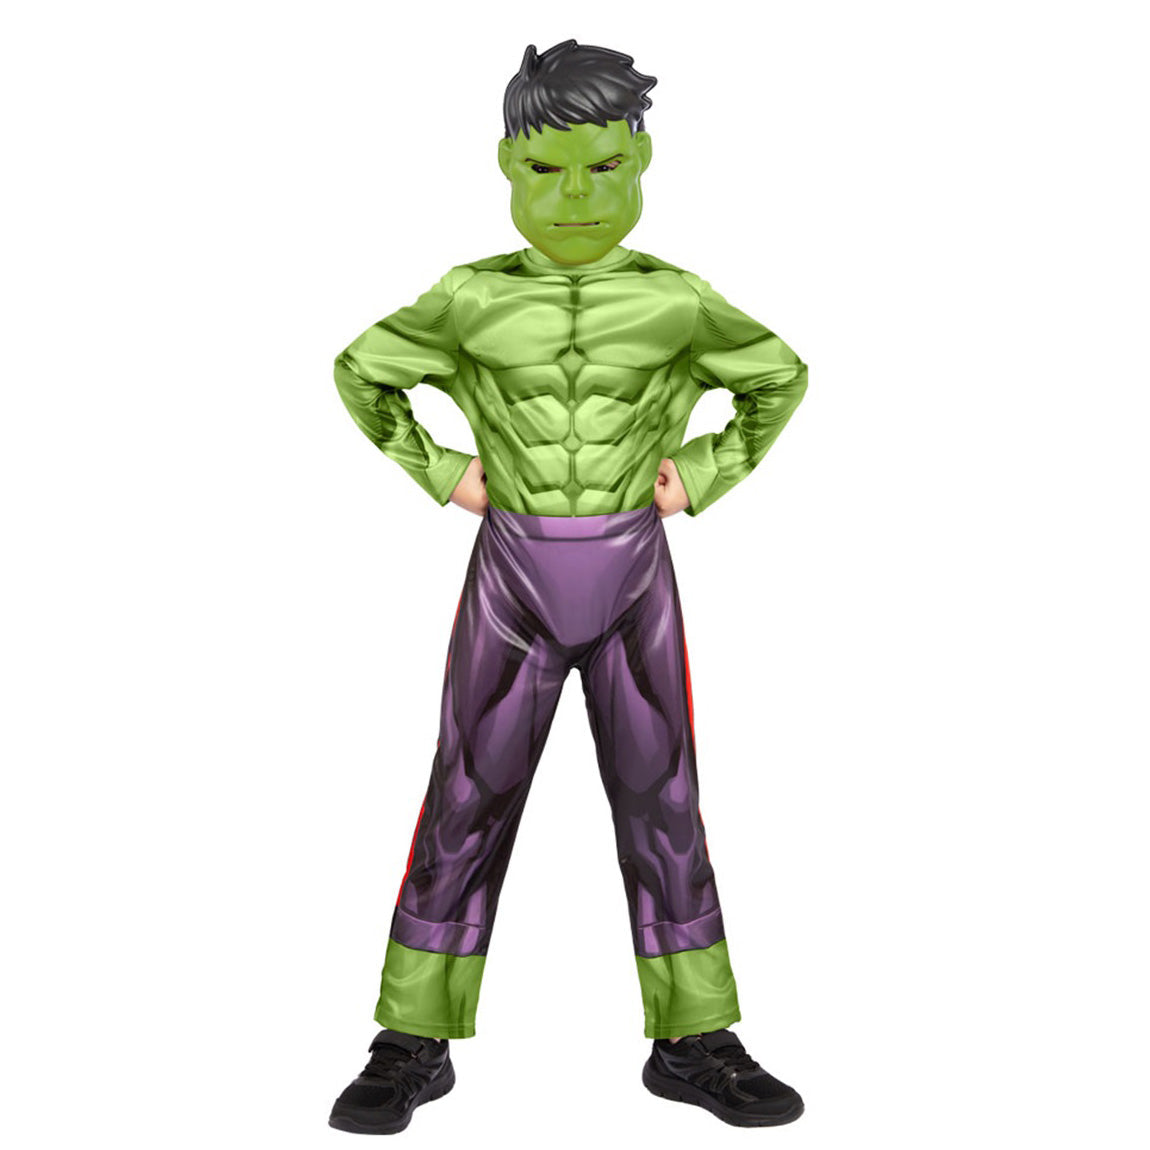 Hulk clothes for children